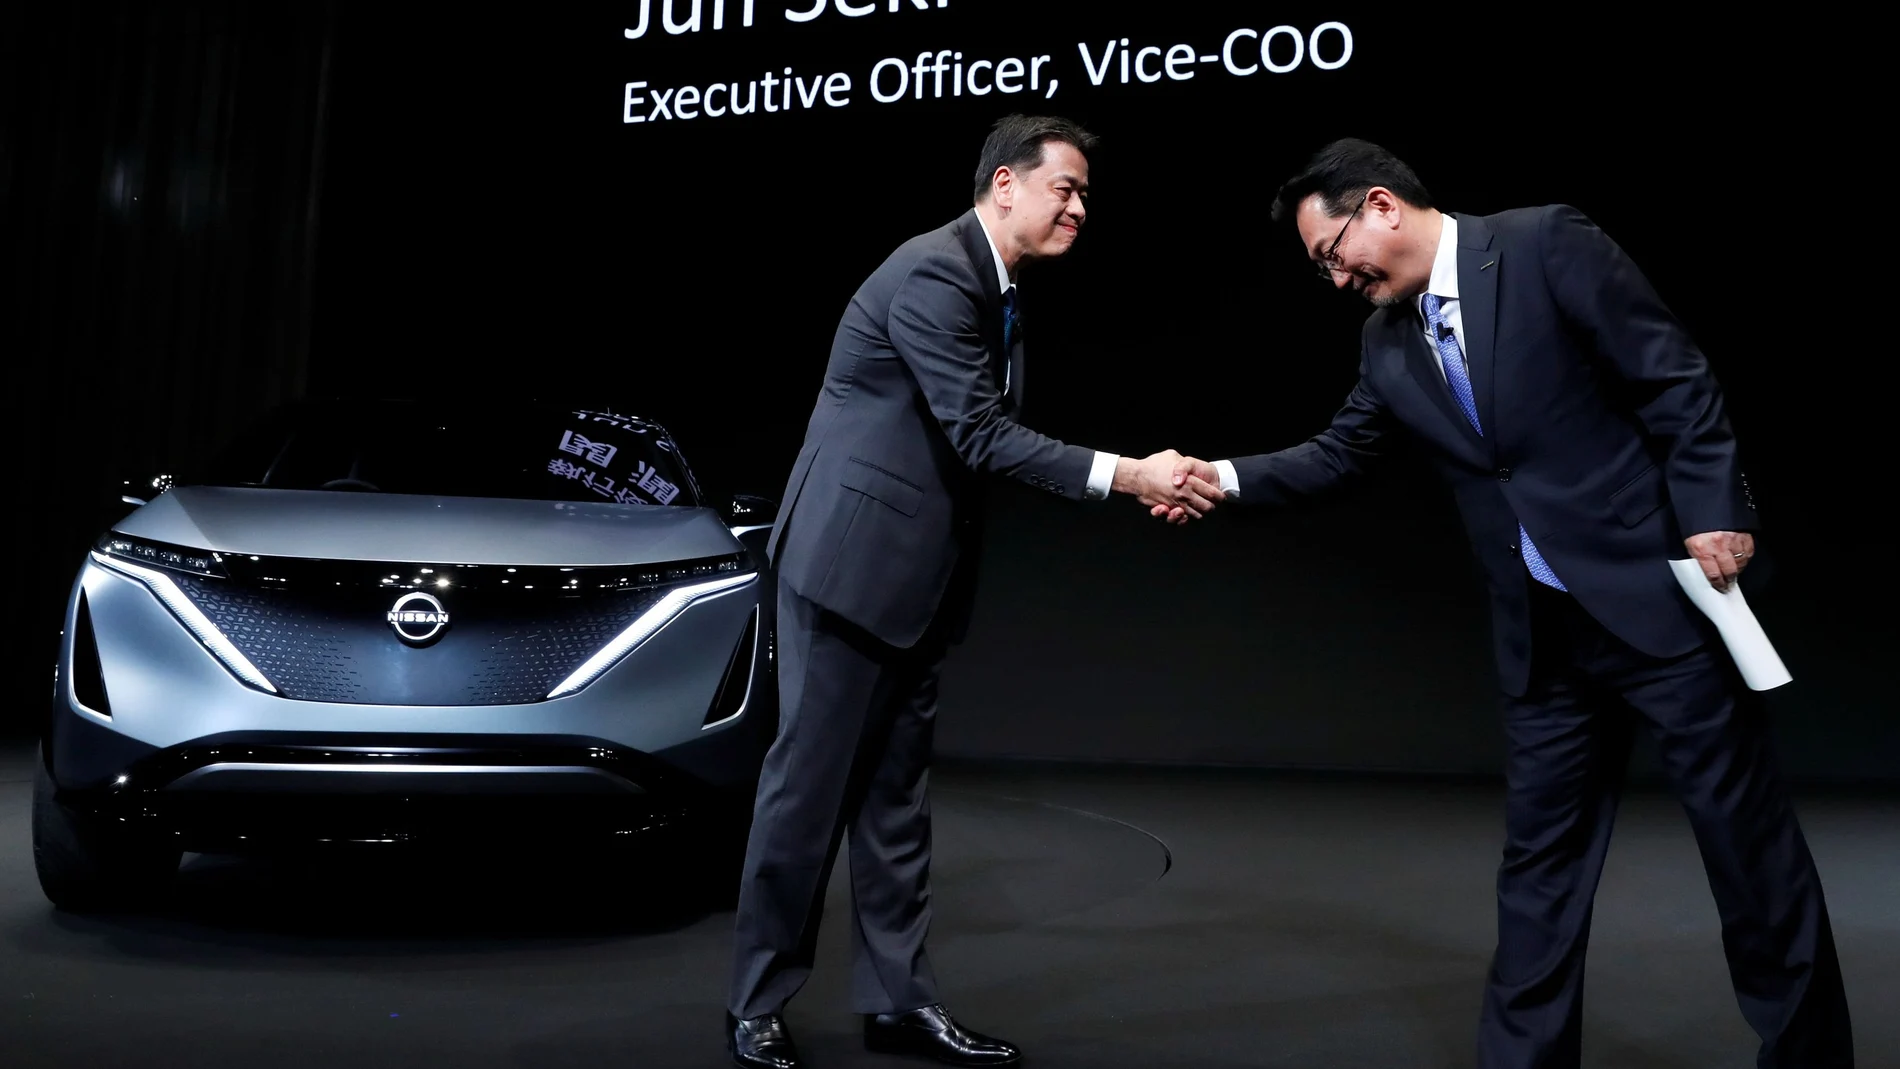 FILE PHOTO: Nissan Motor's chief executive Makoto Uchida shakes hands with Nissan Motor's executive officer vice-COO Jun Seki during a news conference in Yokohama